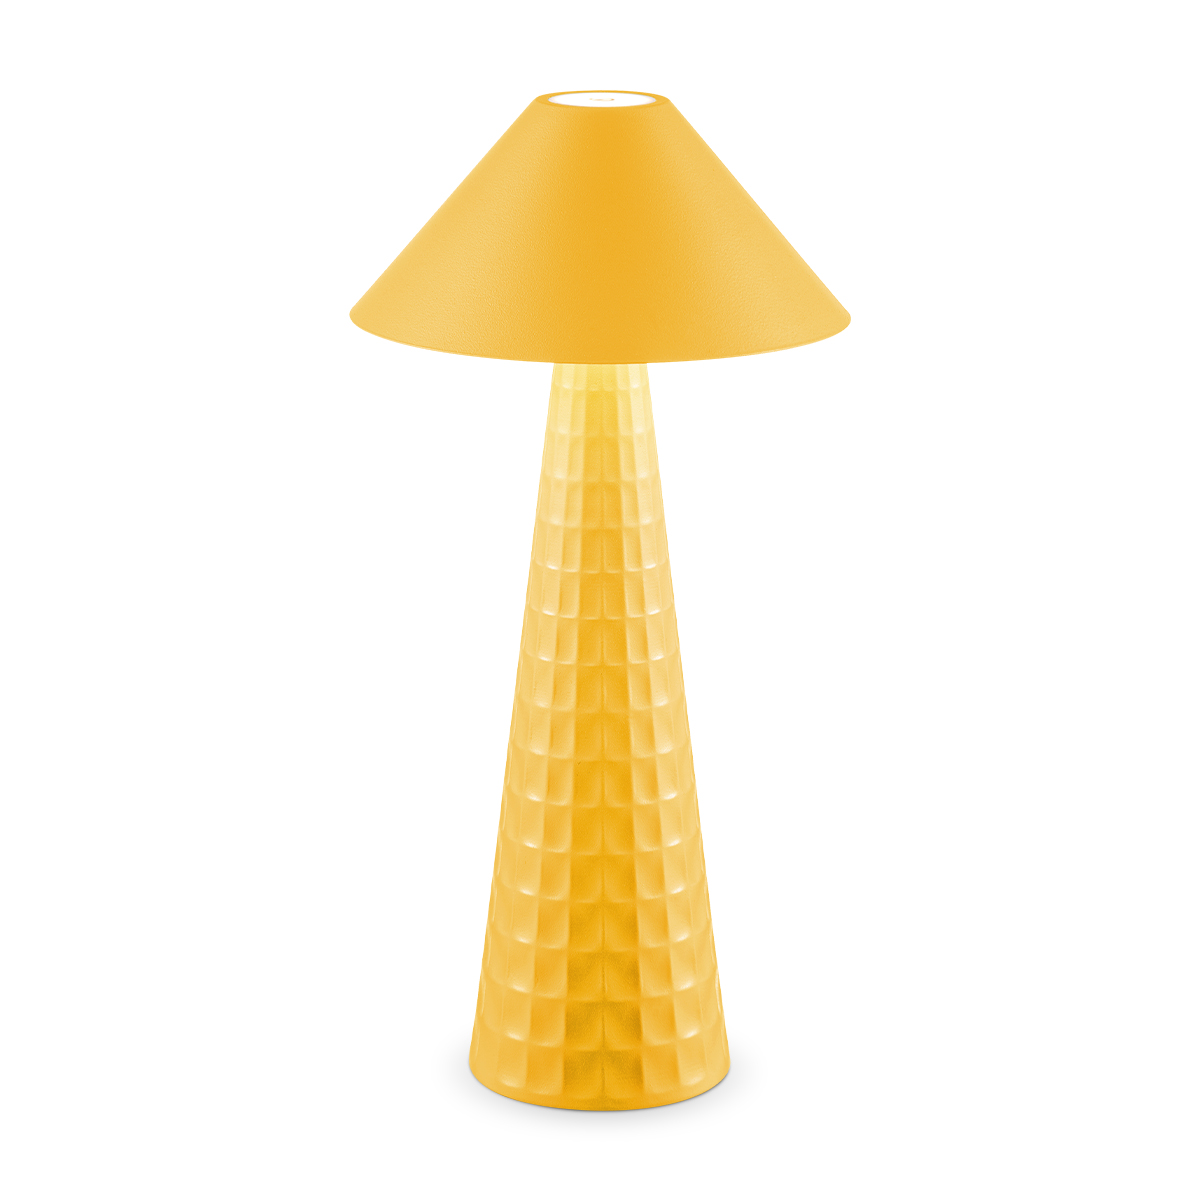 Tangla lighting - TLT7645-01YW - LED table lamp - rechargeable plastic and metal - yellow - mushroom